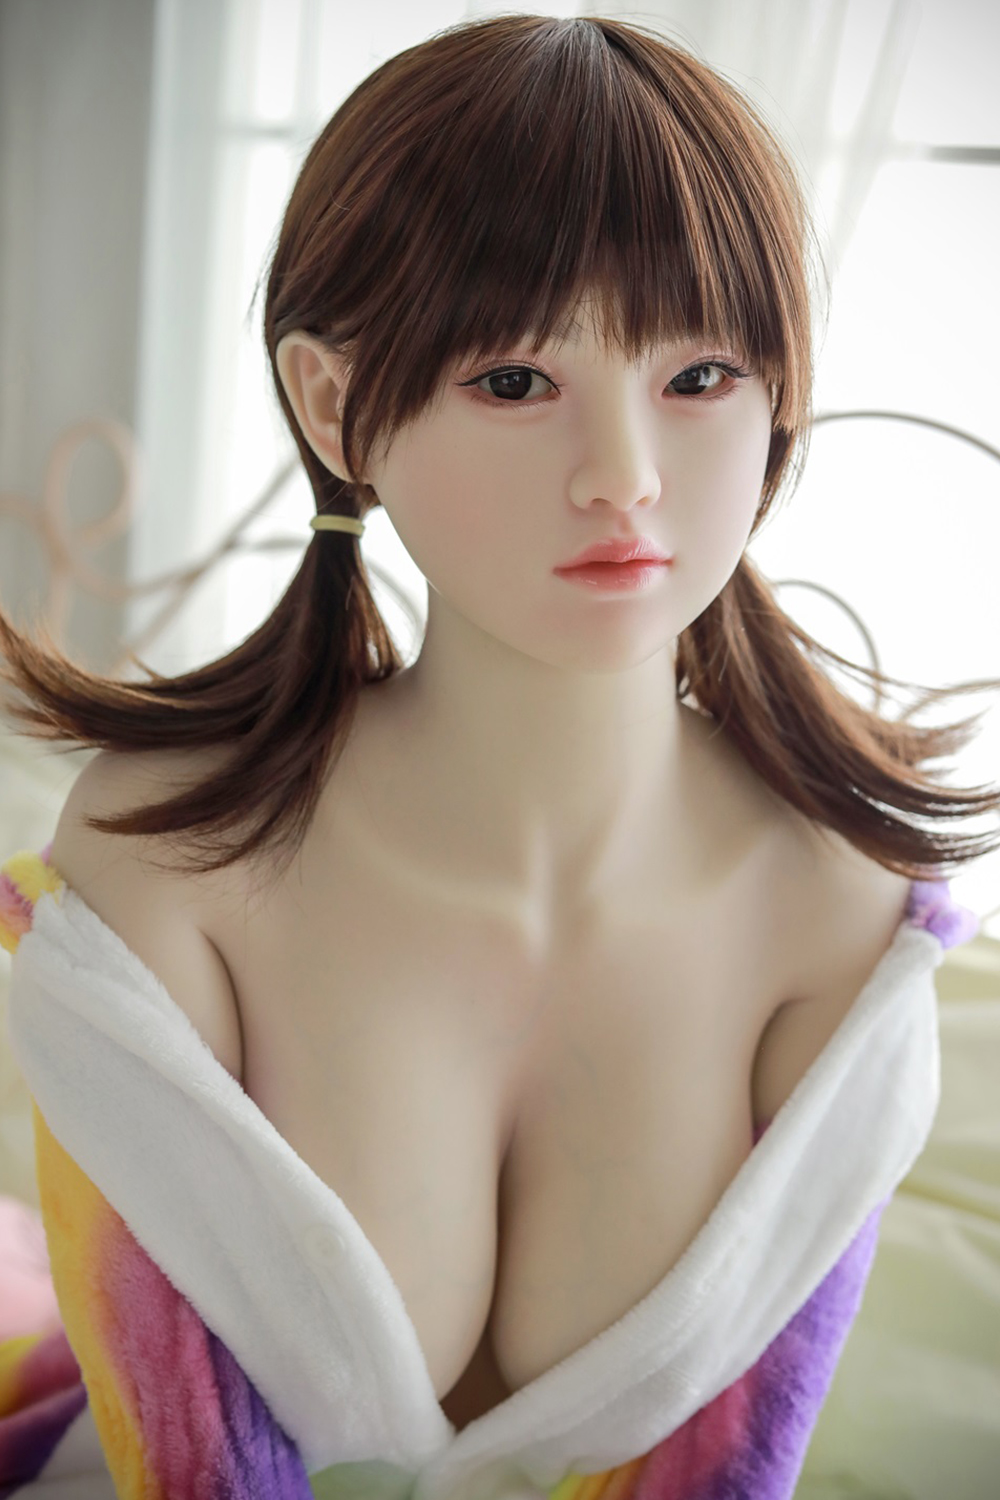 Yori - 4ft 10/148cmJapanese Small Breast Silicone Sex Doll